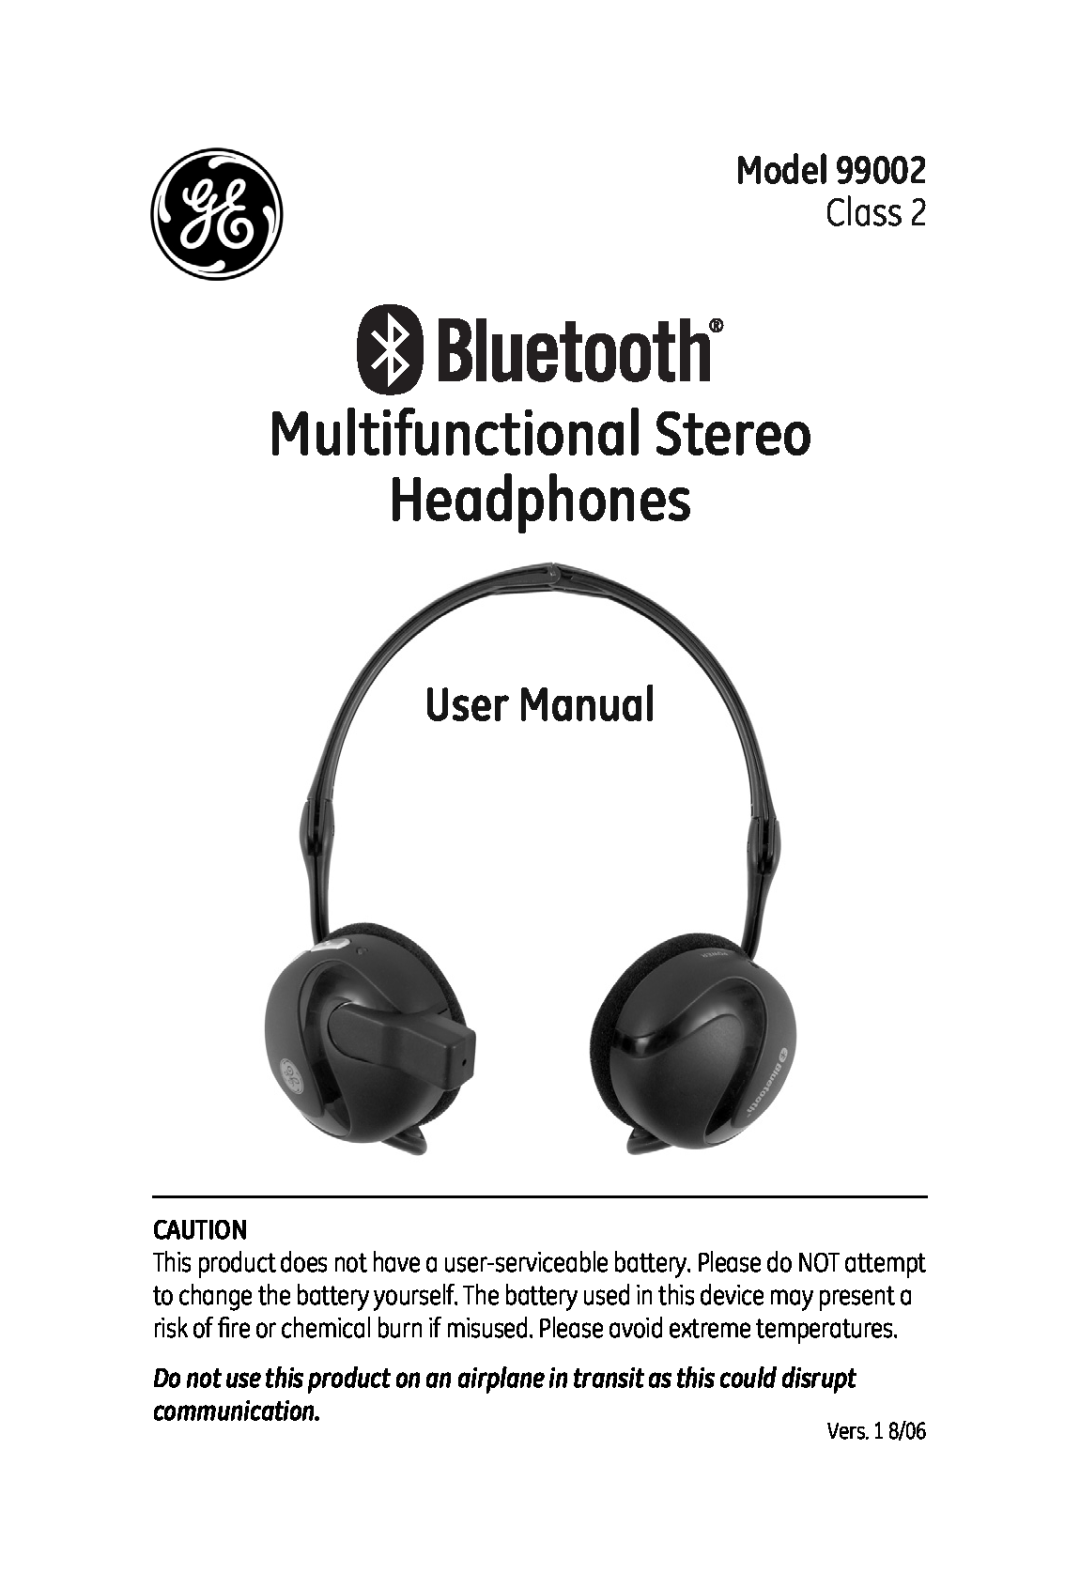 Jasco 99002 user manual Multifunctional Stereo Headphones, Model, Class 